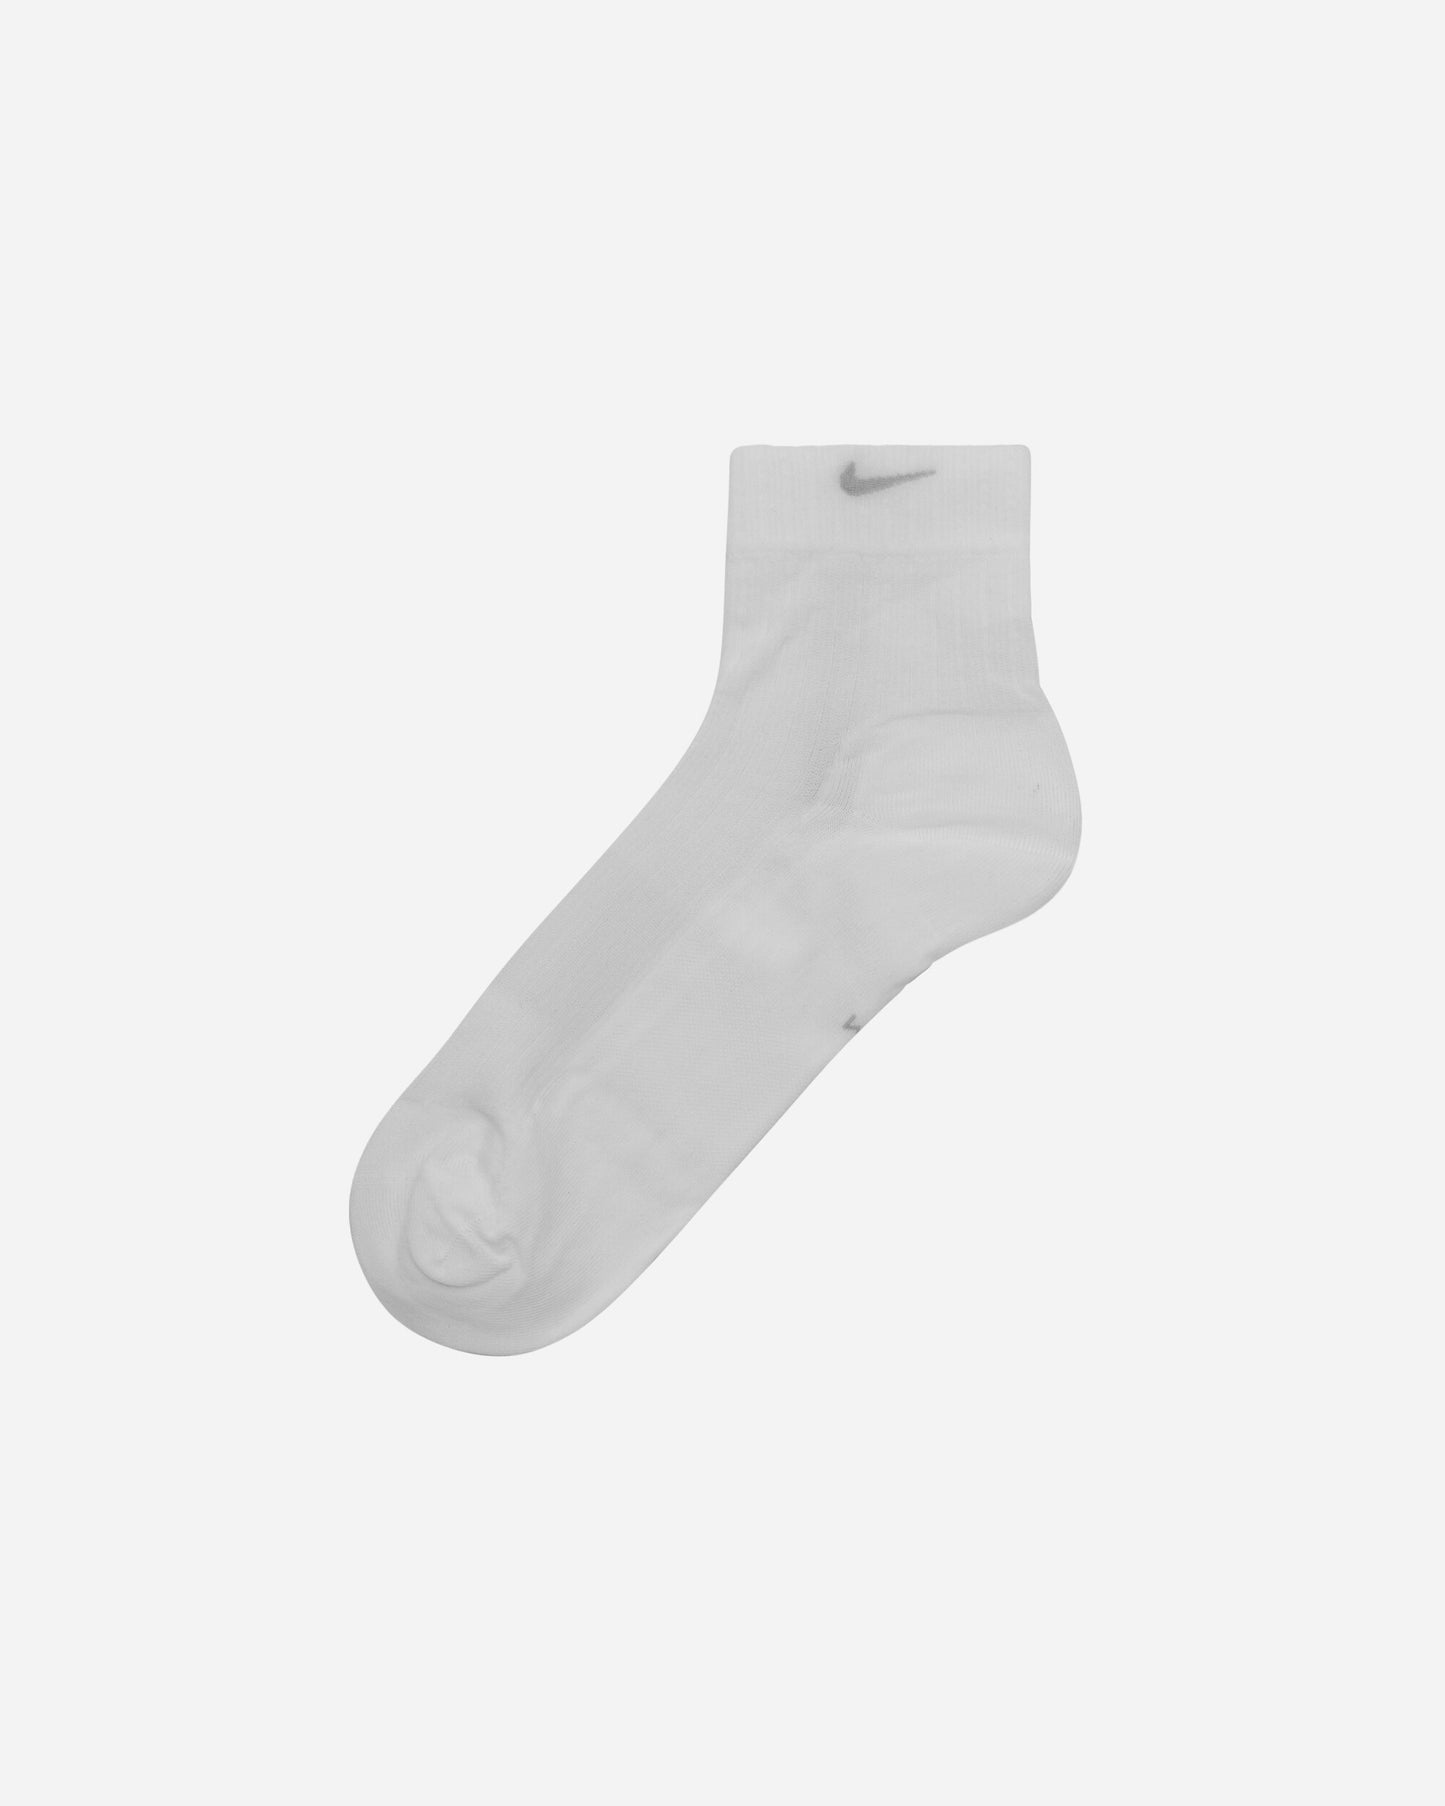 Nike W Nk Sheer Ankle 1Pr - 200 White/Lt Smoke Grey Underwear Socks FJ2239-100